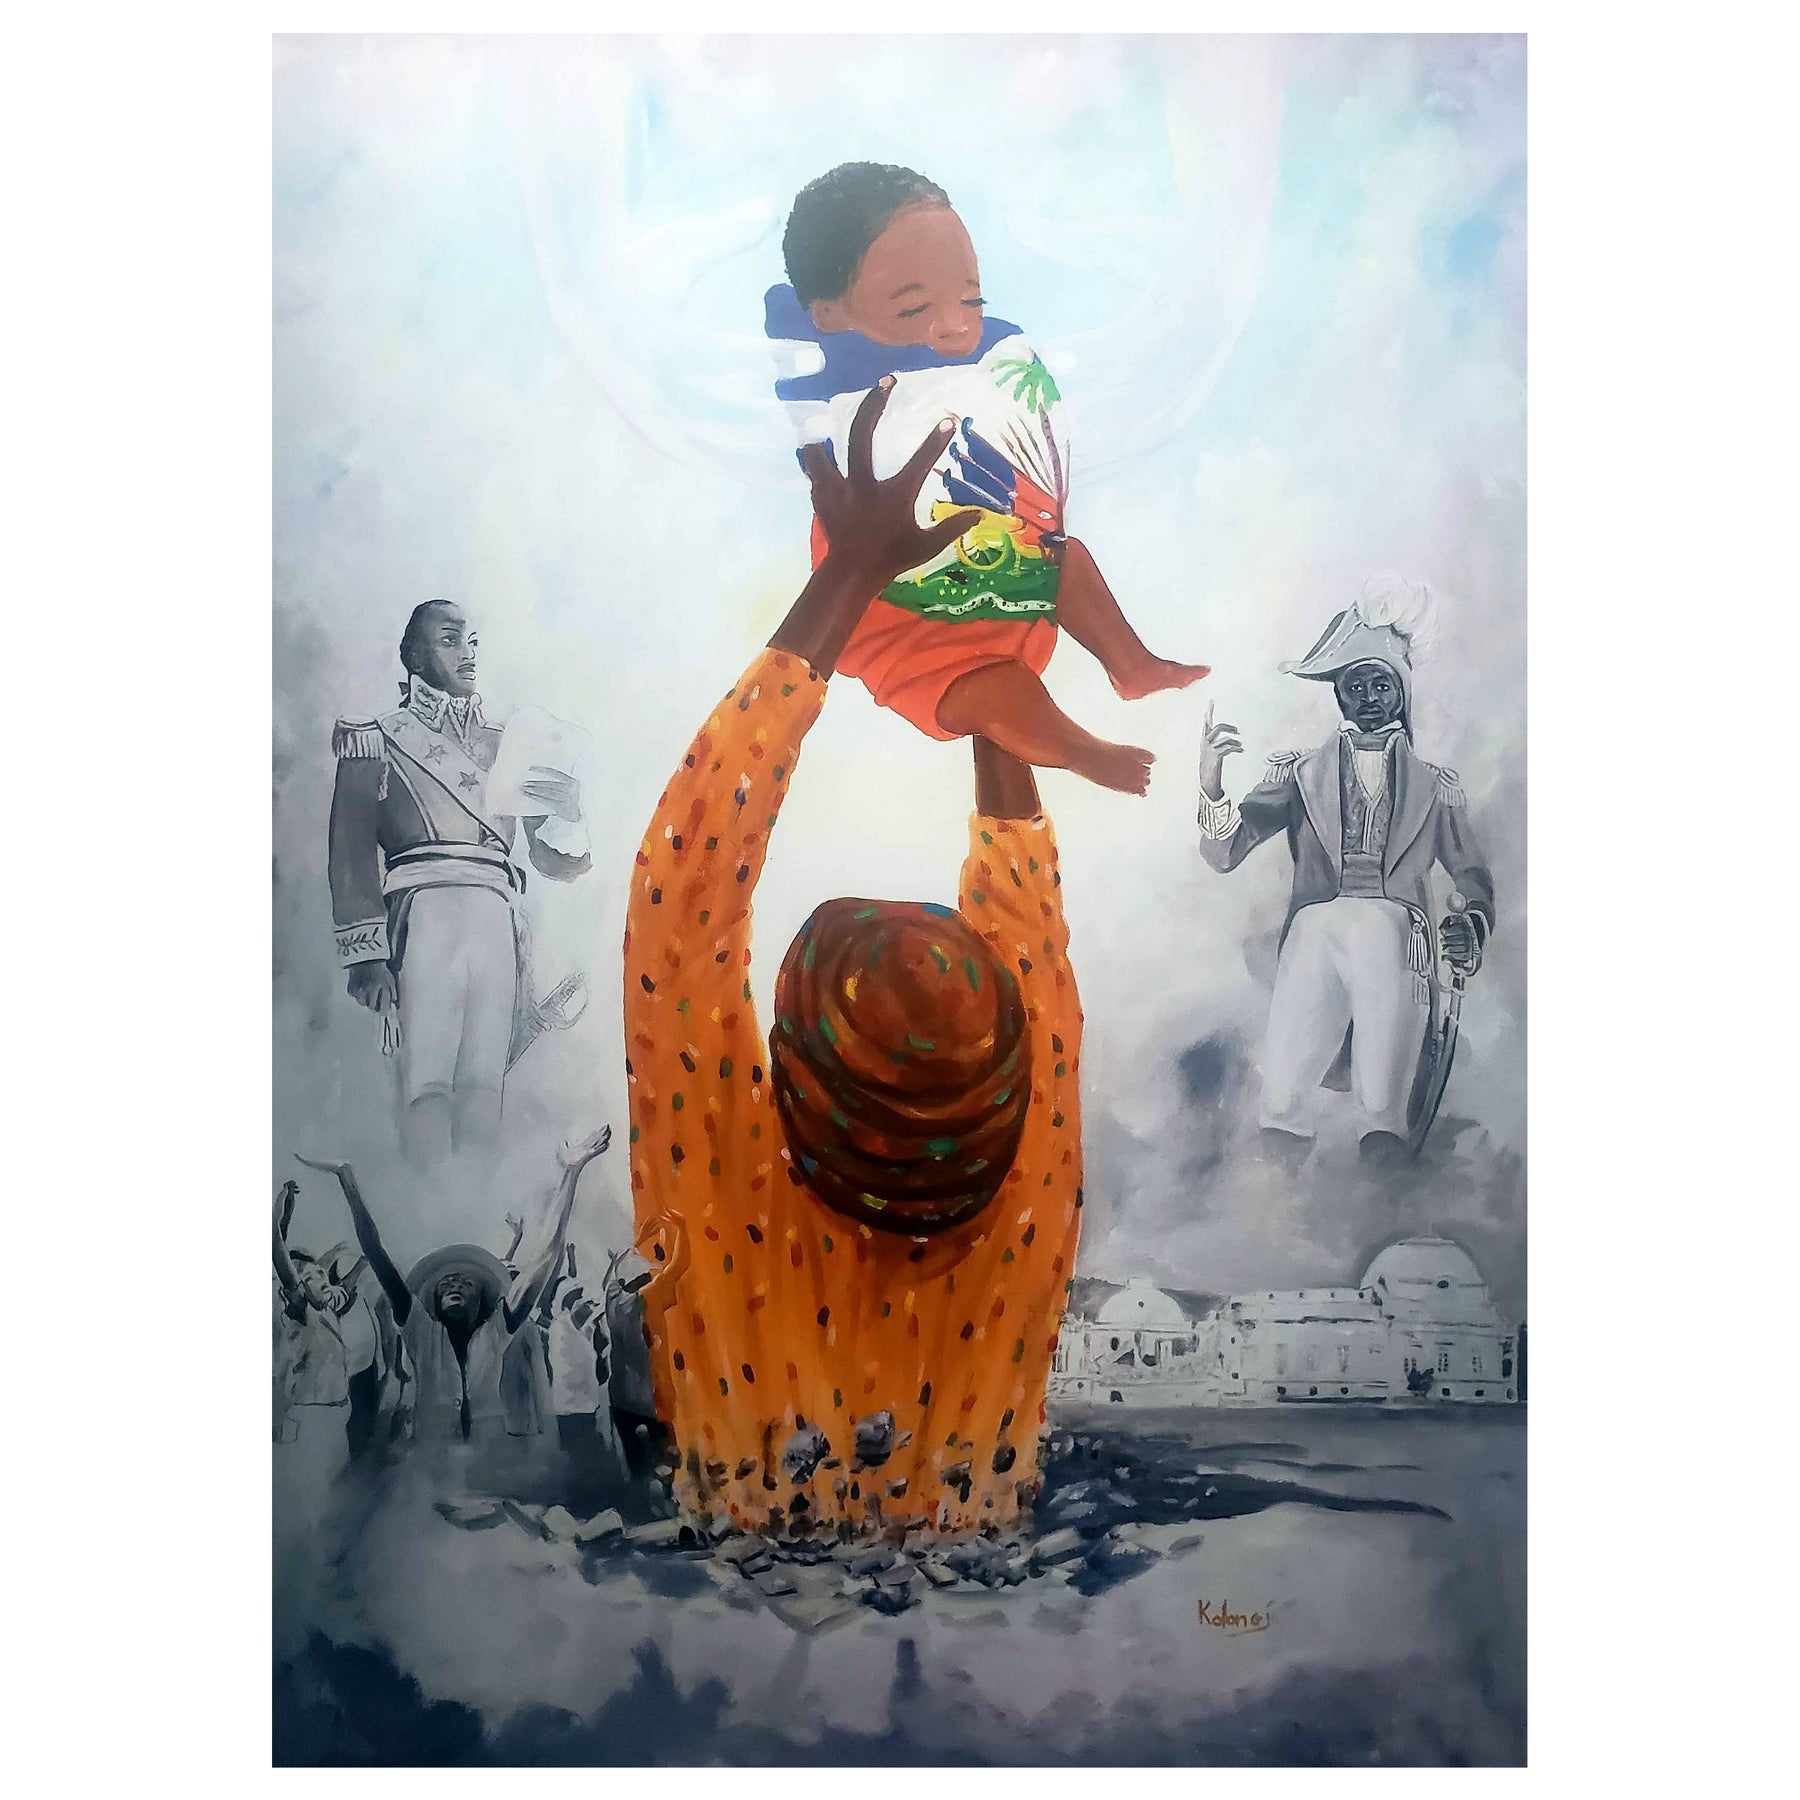 1 of 2: We Will Rise: A Tribute to the Haitian Spirit by Kolongi Brathwaite